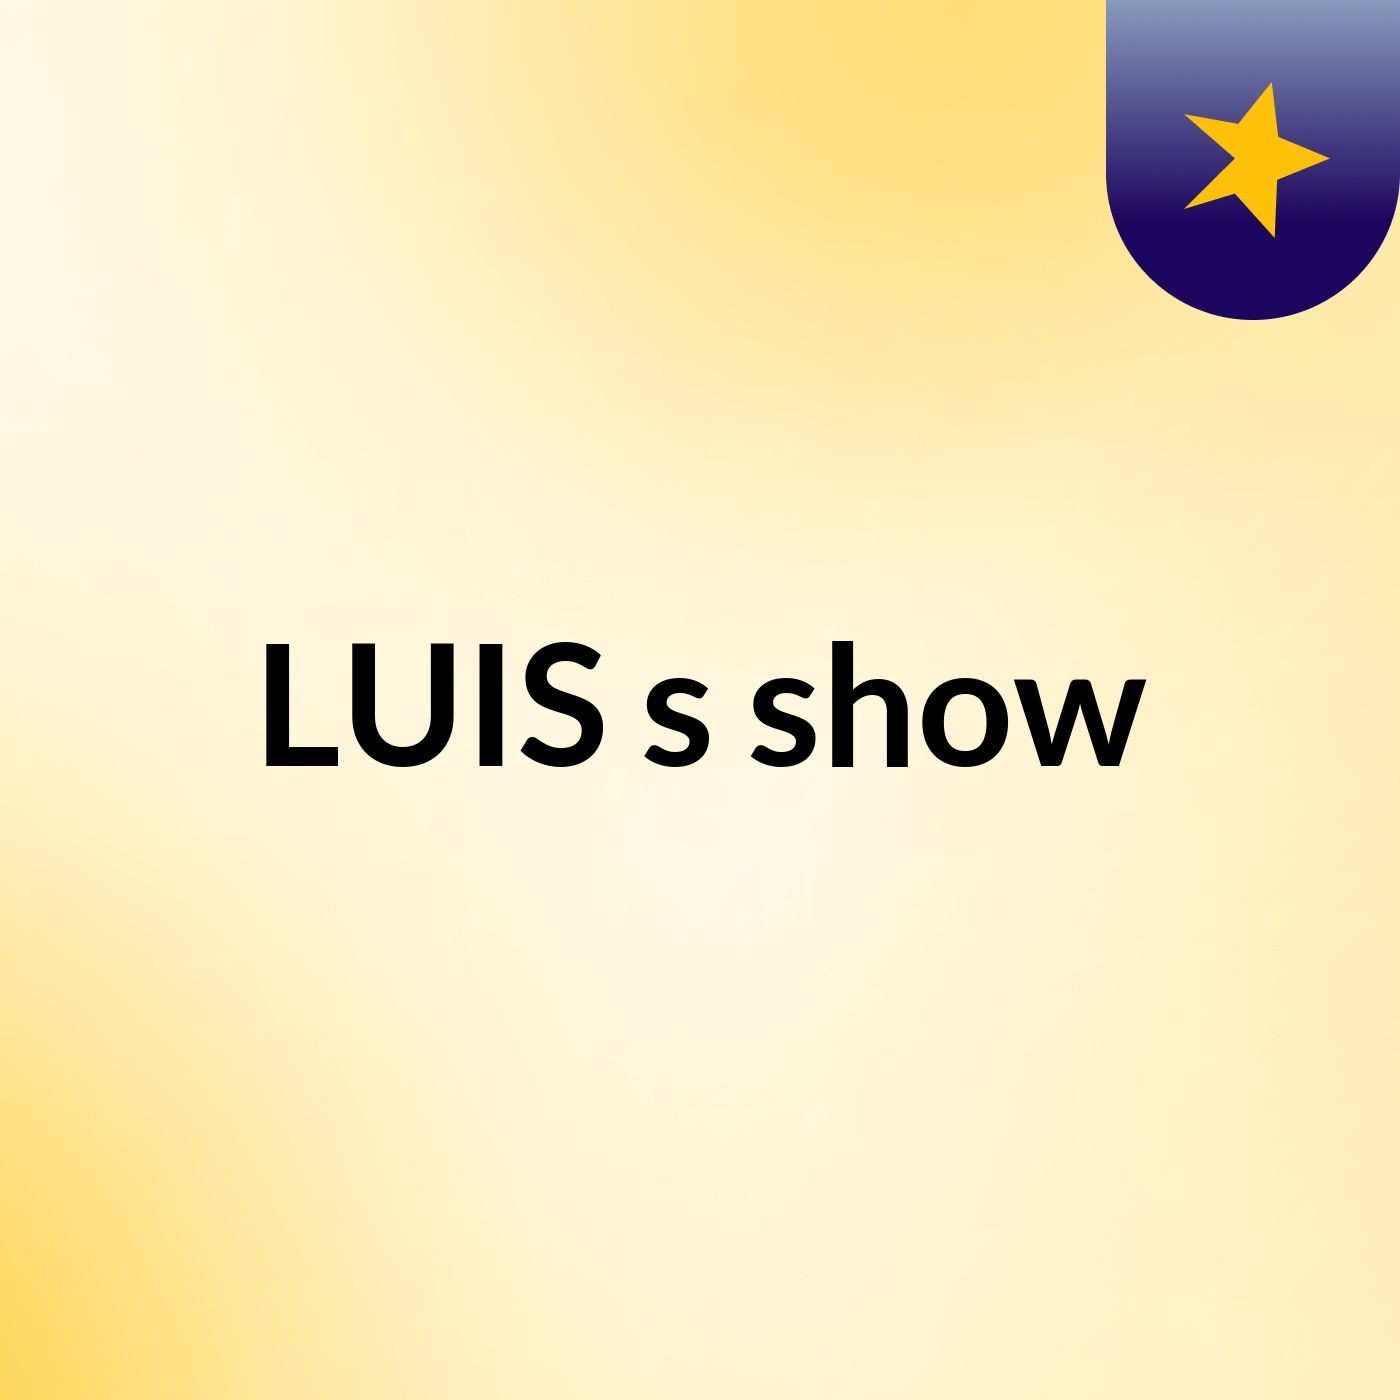 LUIS's show